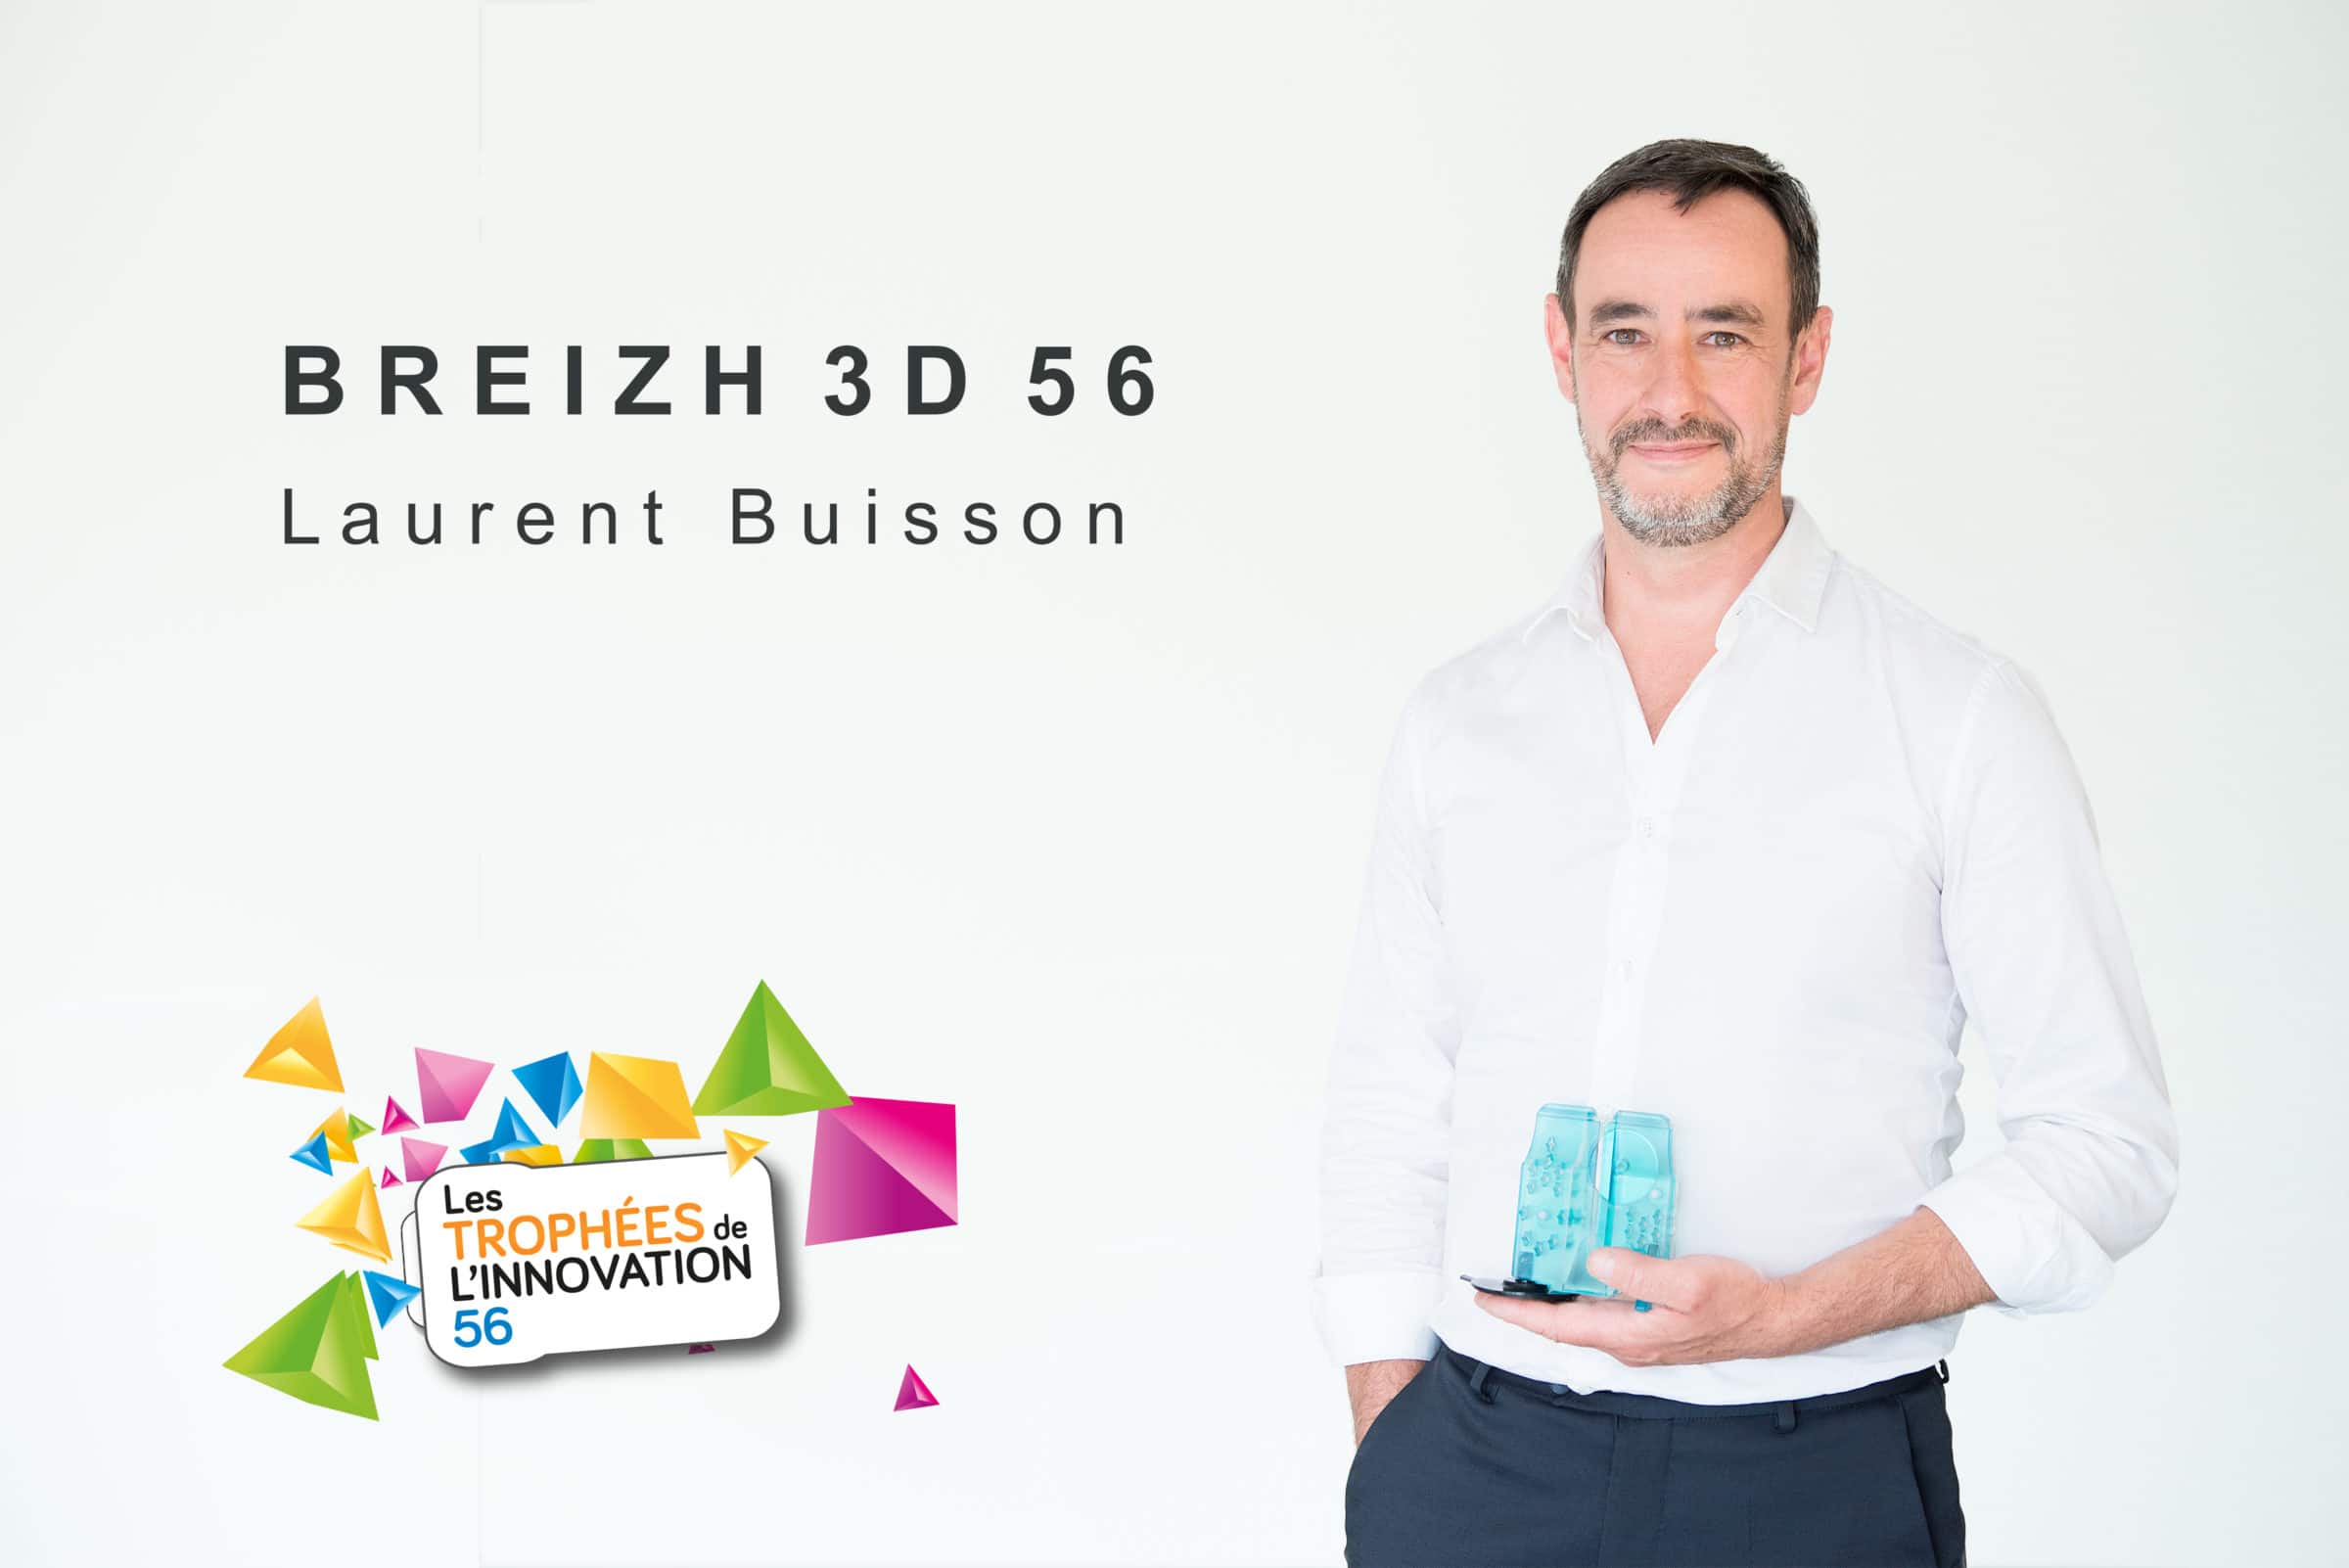 BREIZH 3D Laurent Buisson @SIRVAIN